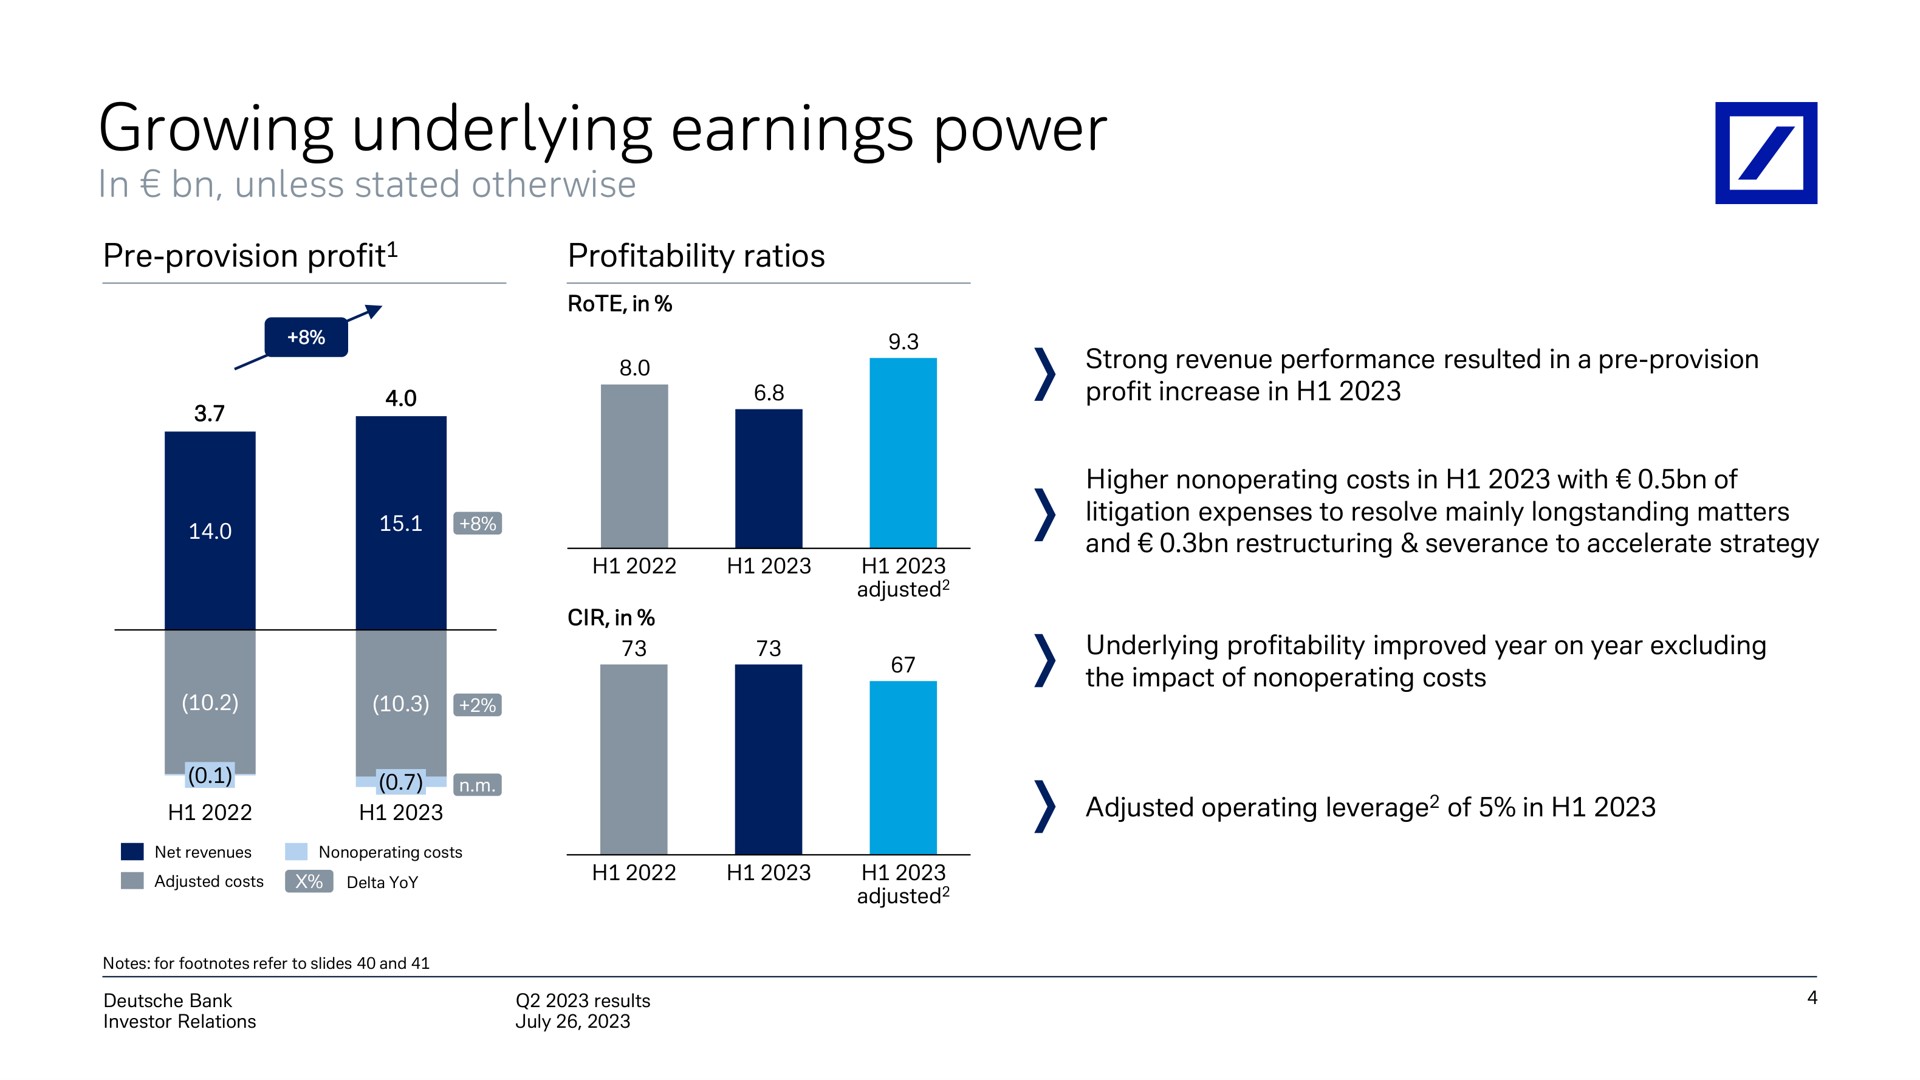 growing underlying earnings power | Deutsche Bank